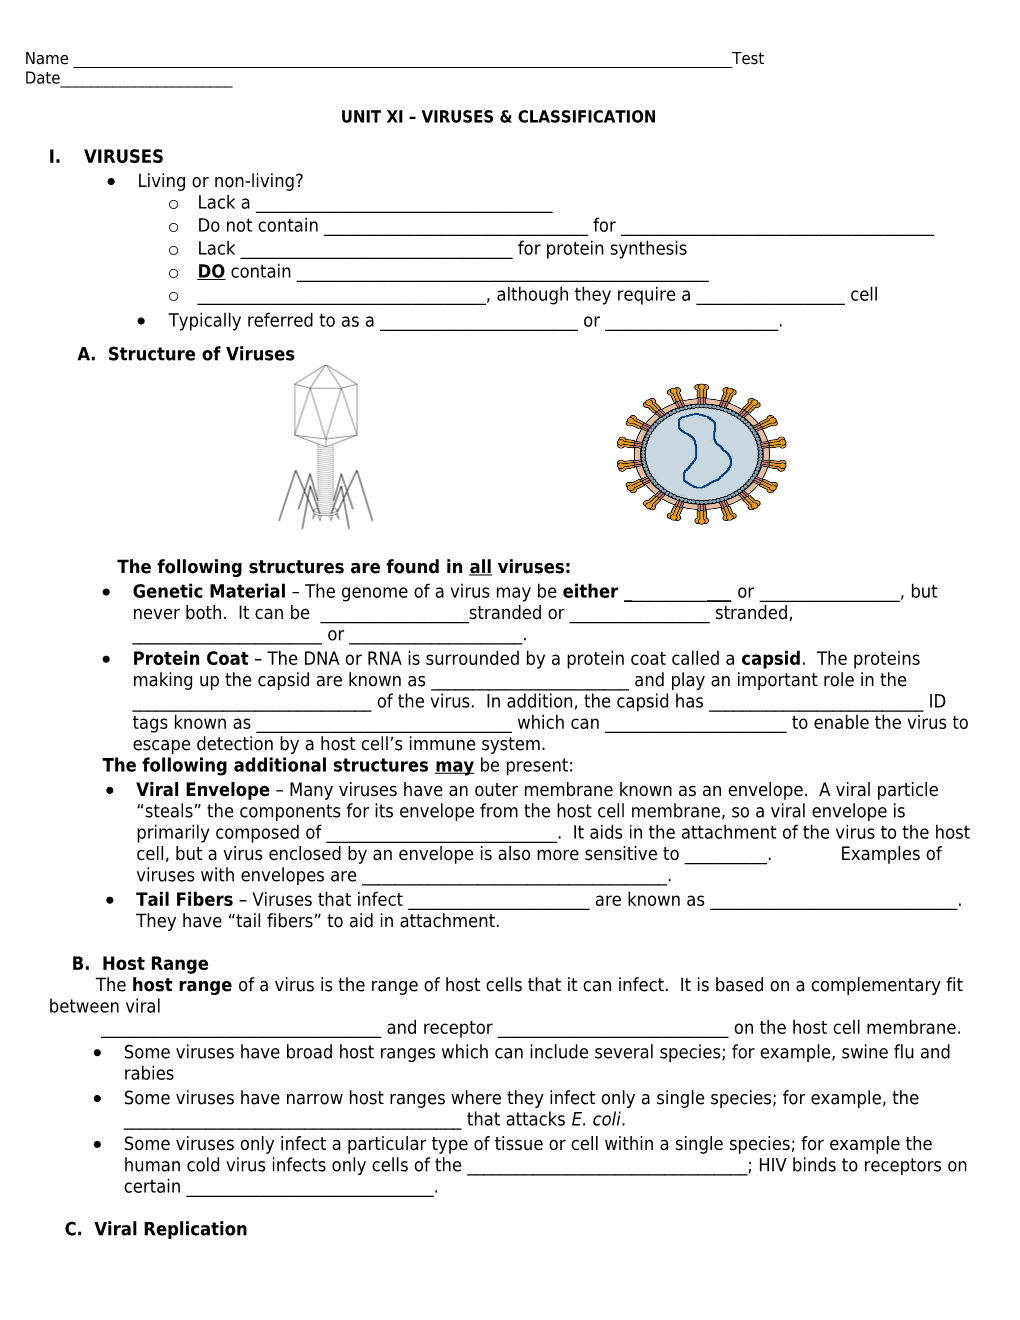 Unit Xi Viruses &Classification